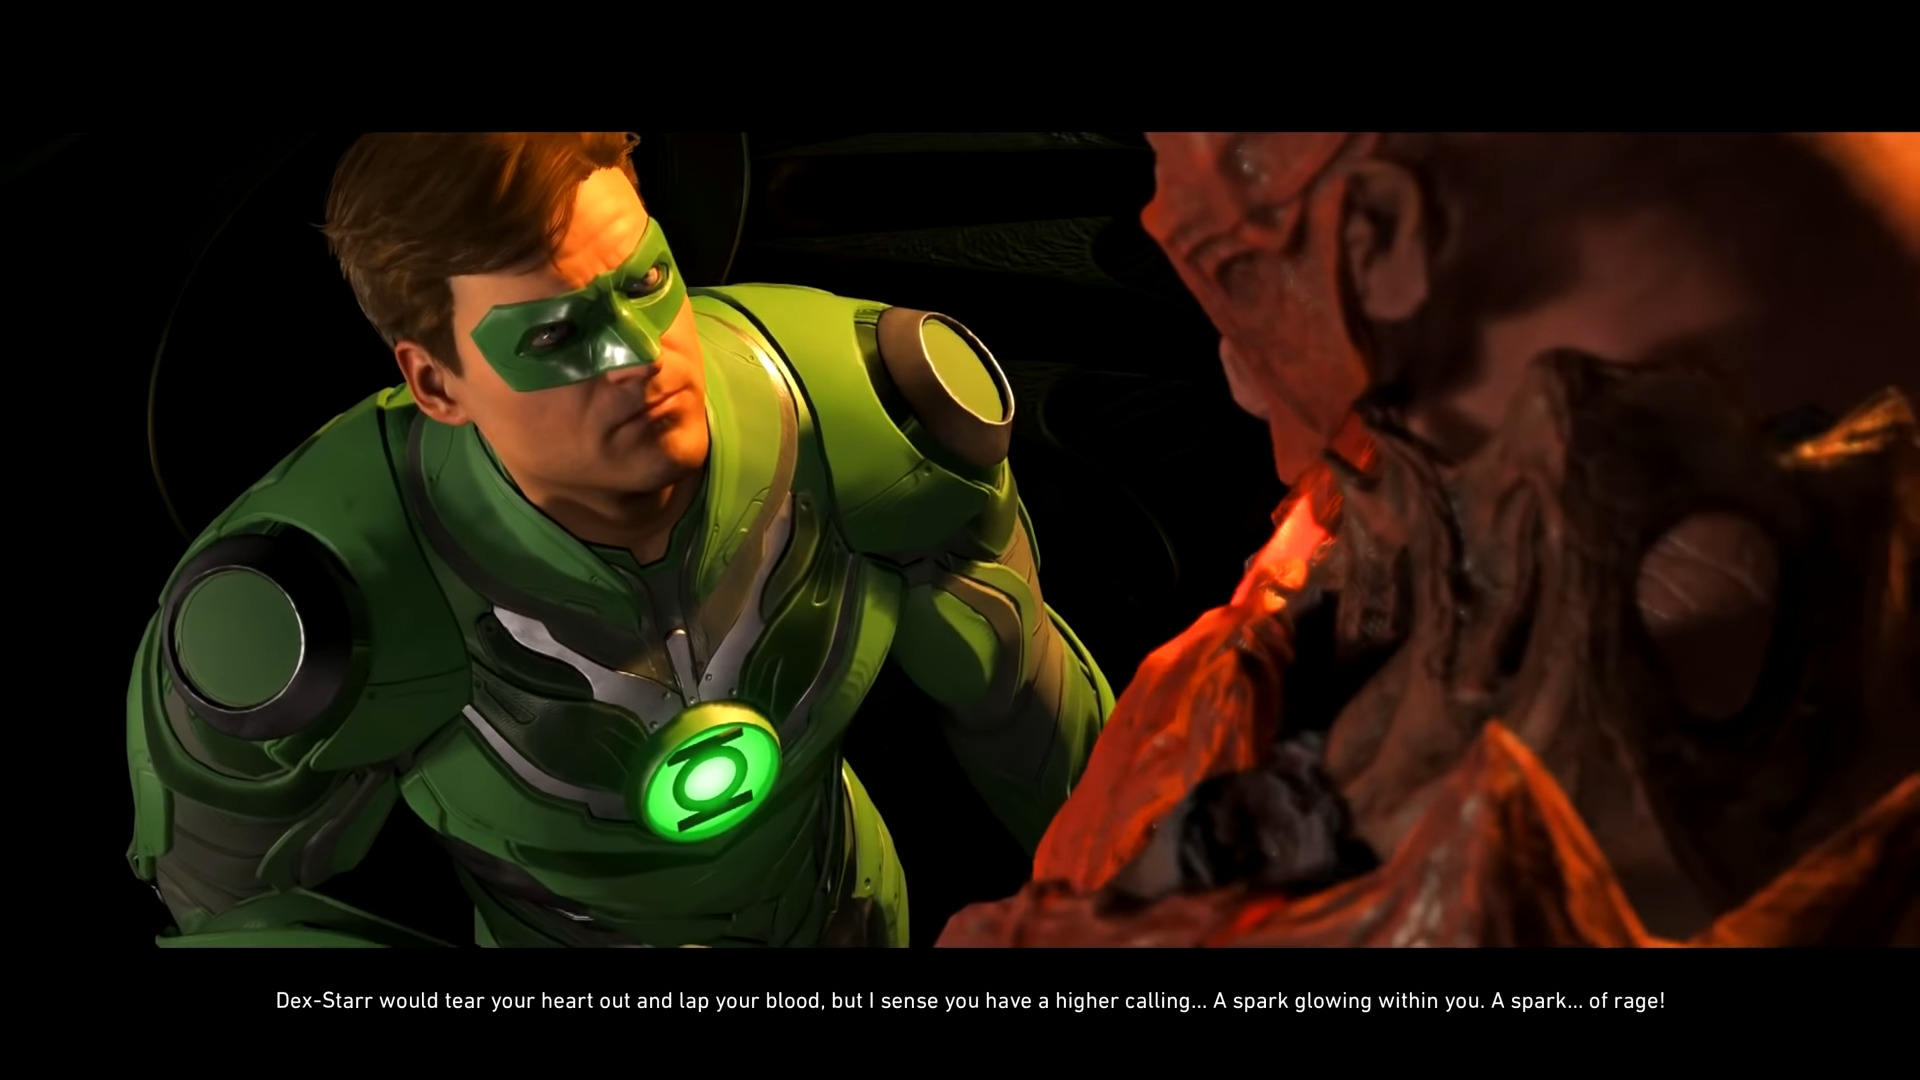 Atrocitus (Ike Amadi) senses the rage within Hal Jordan (Steve Blum) in Injustice 2 (2017), NetherRealm Studios 